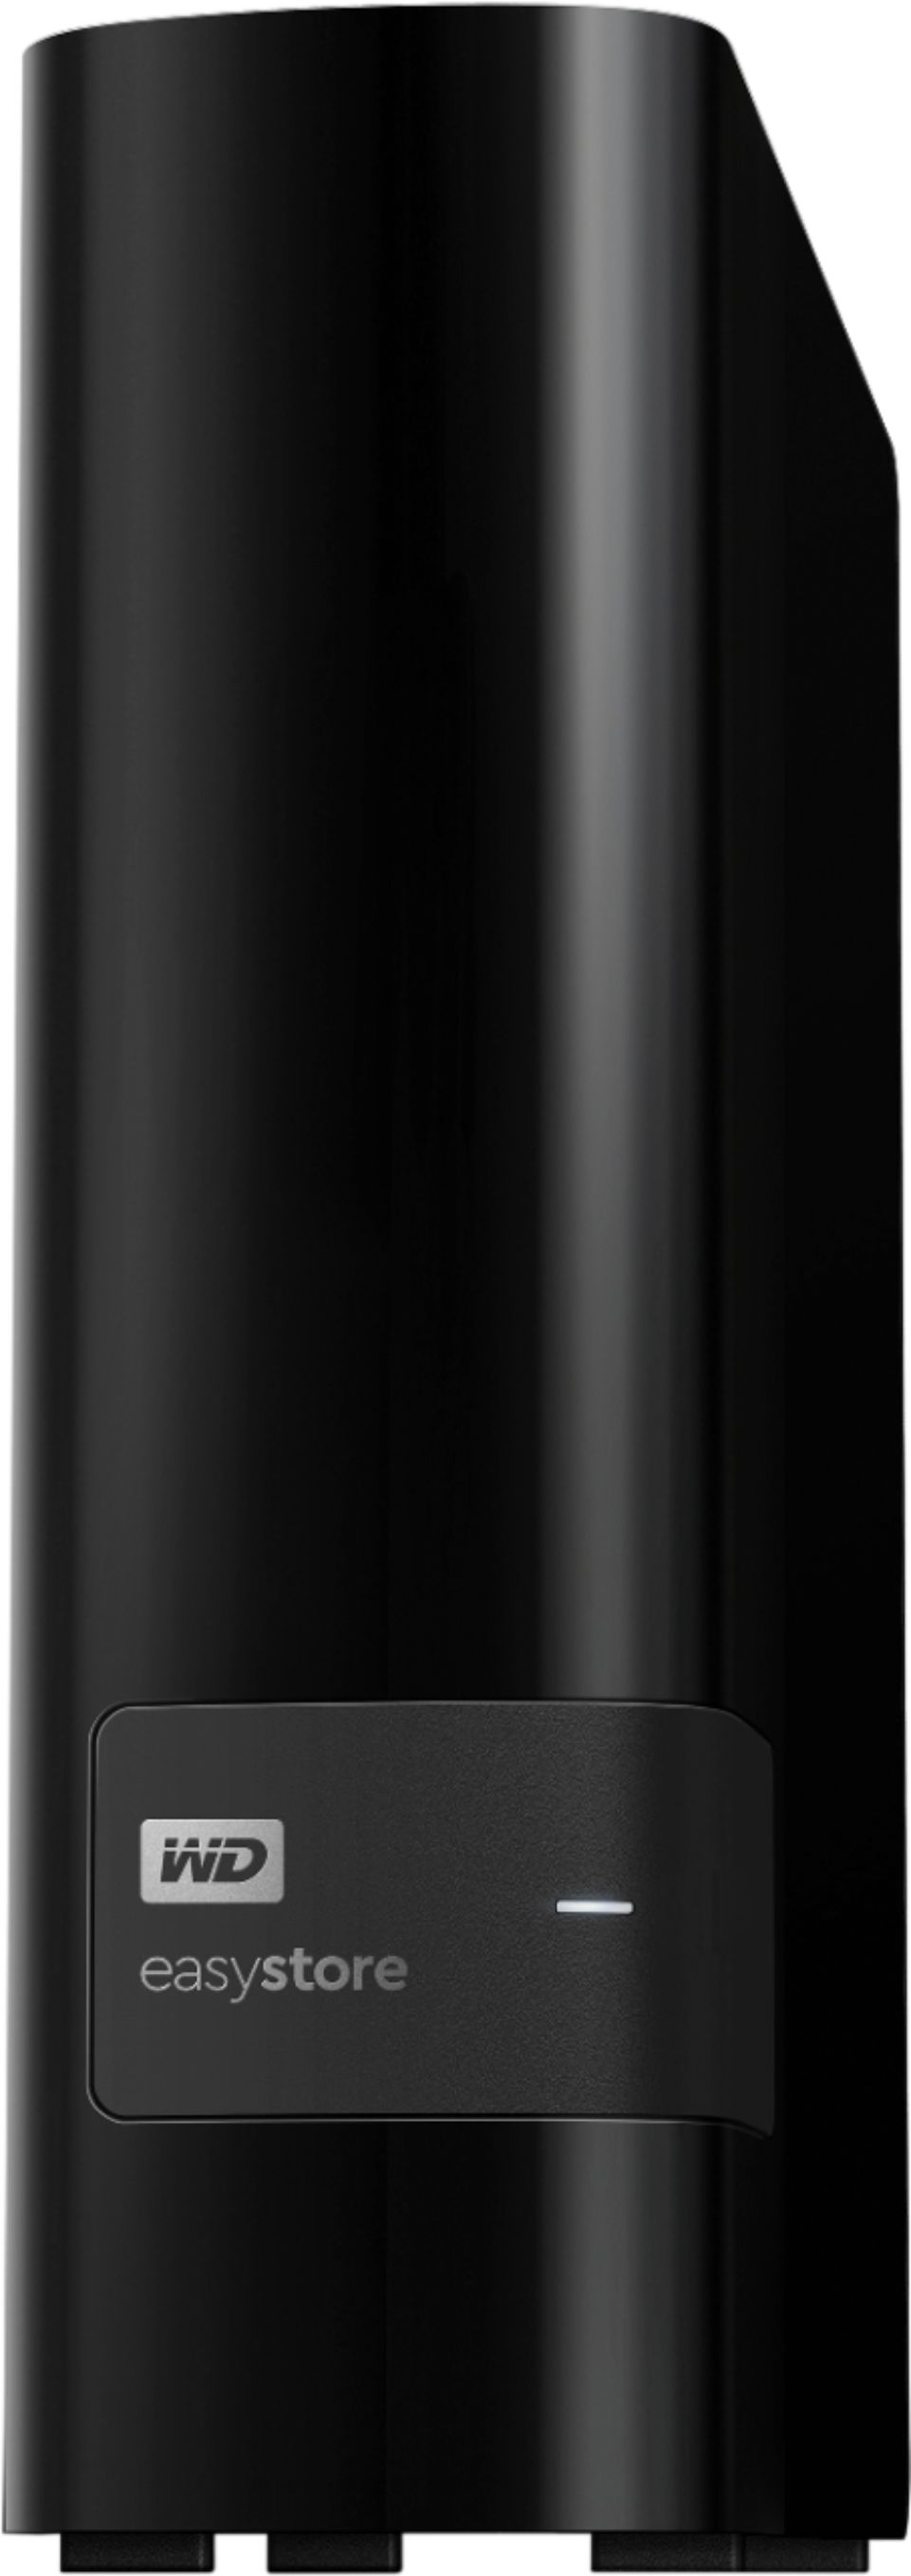 Best Buy: WD easystore 4TB External USB 3.0 Hard Drive Black